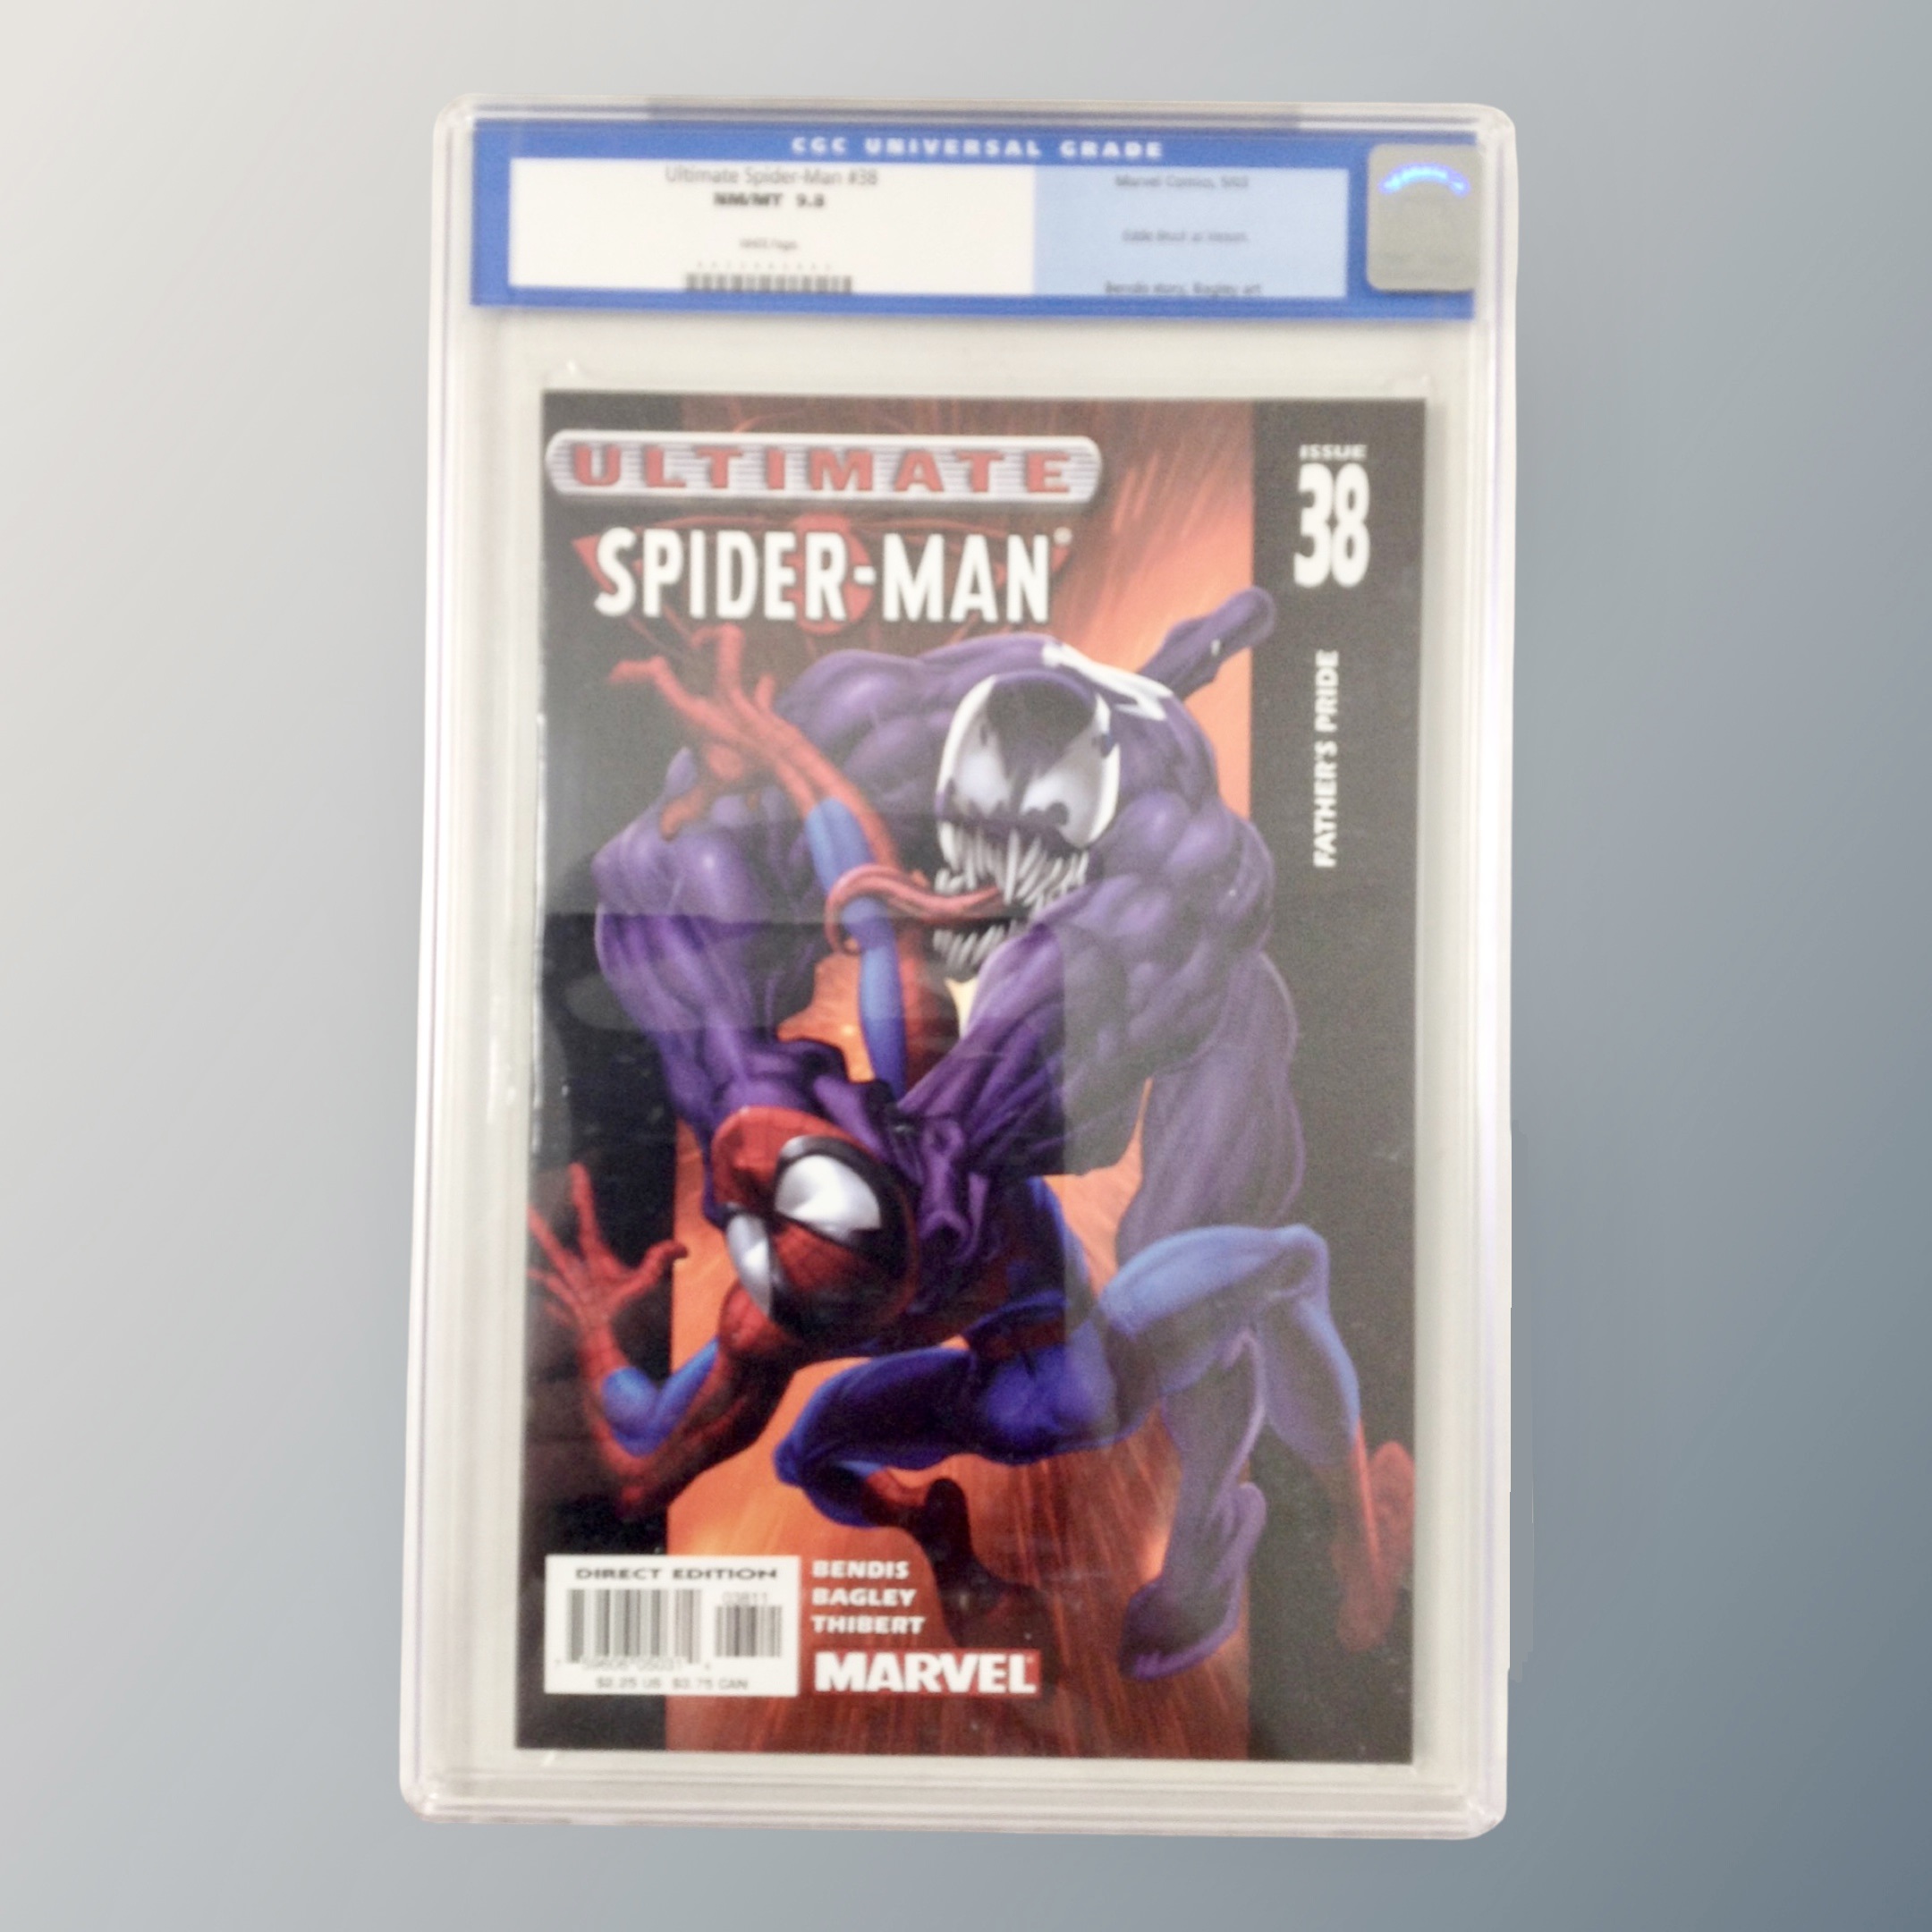 Marvel Comics - Ultimate Spider-Man issue 38 CGC Universal Grade 9.8, slabbed.